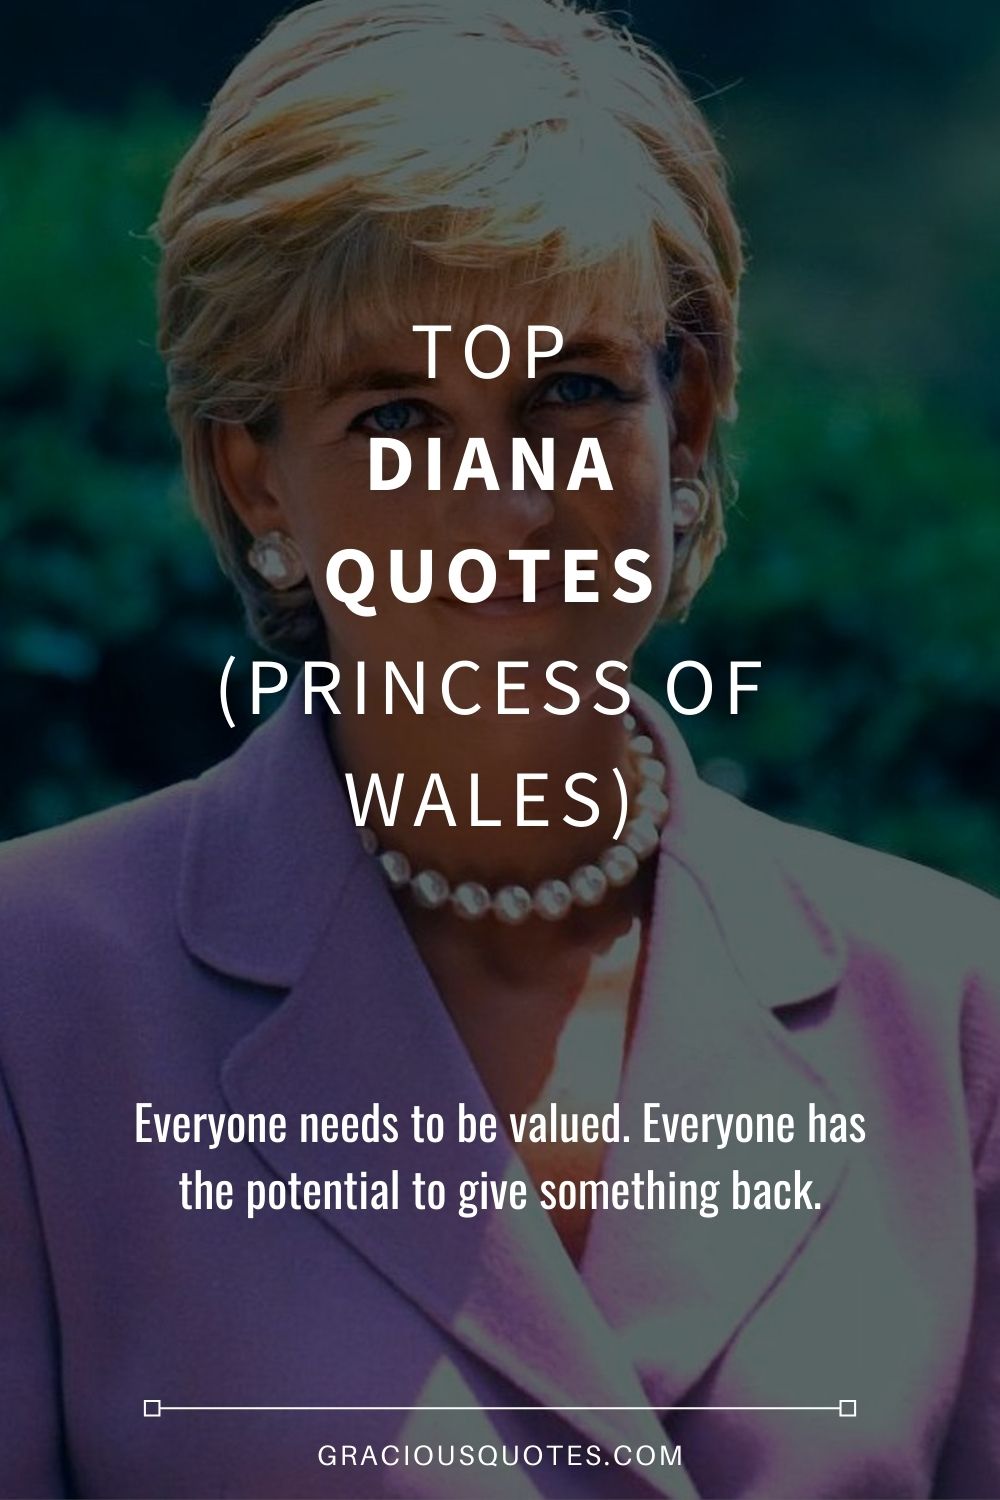 Top Diana Quotes (PRINCESS OF WALES) - Gracious Quotes